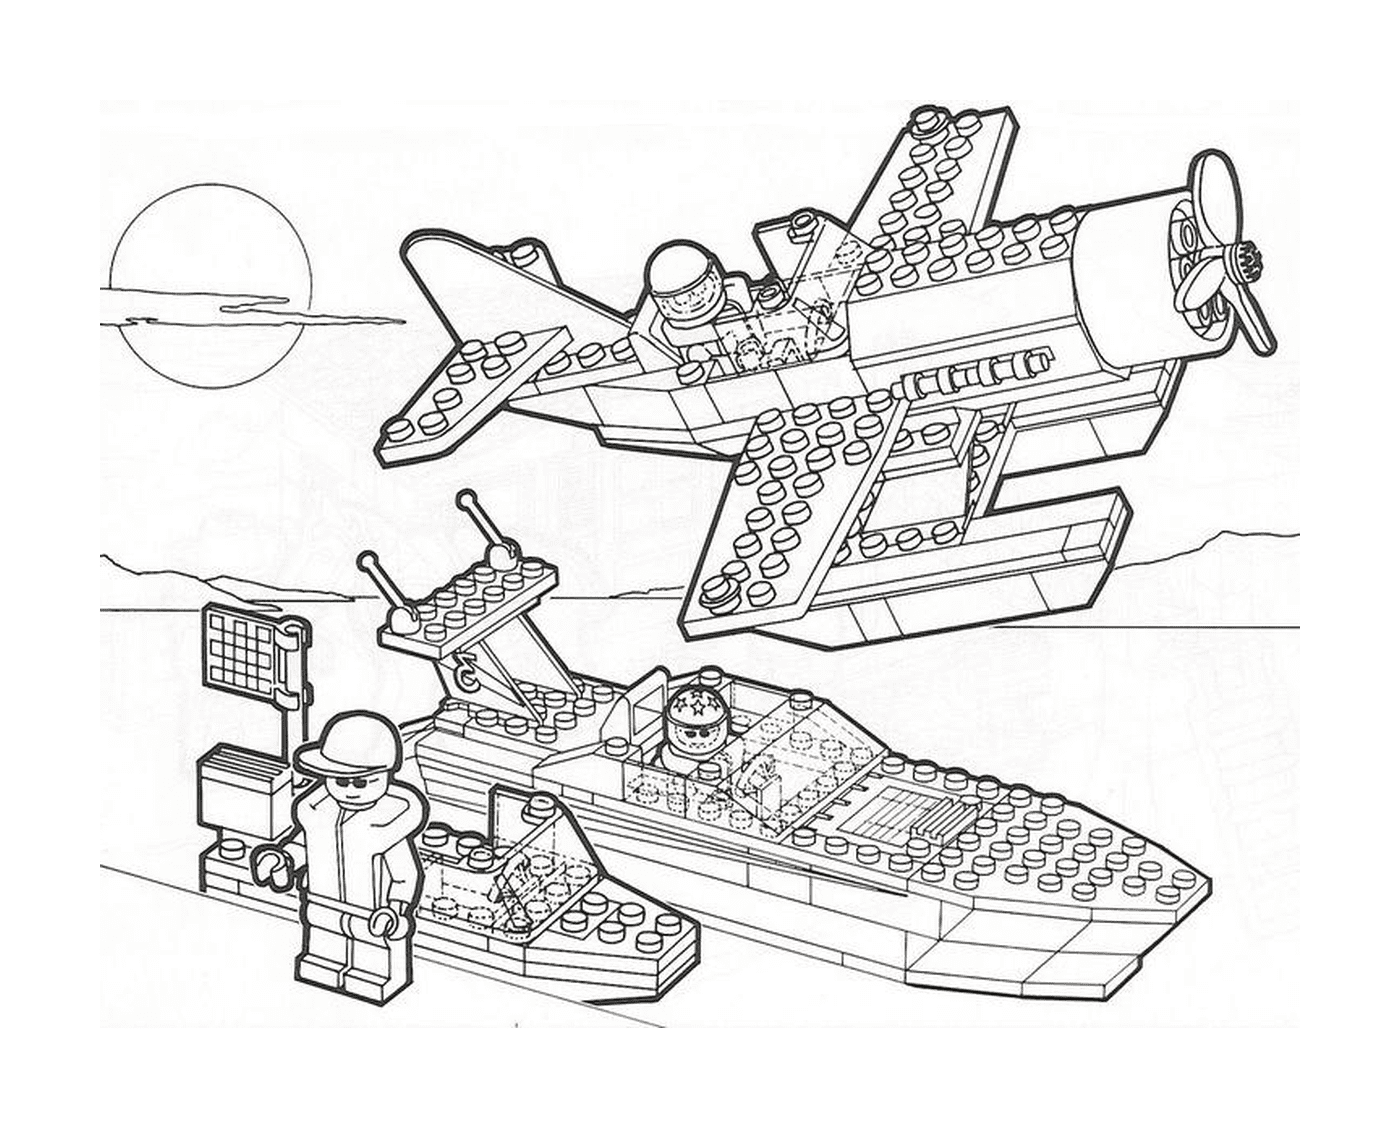  Подводная лодка < < Лего > > и авантюрная лодка 